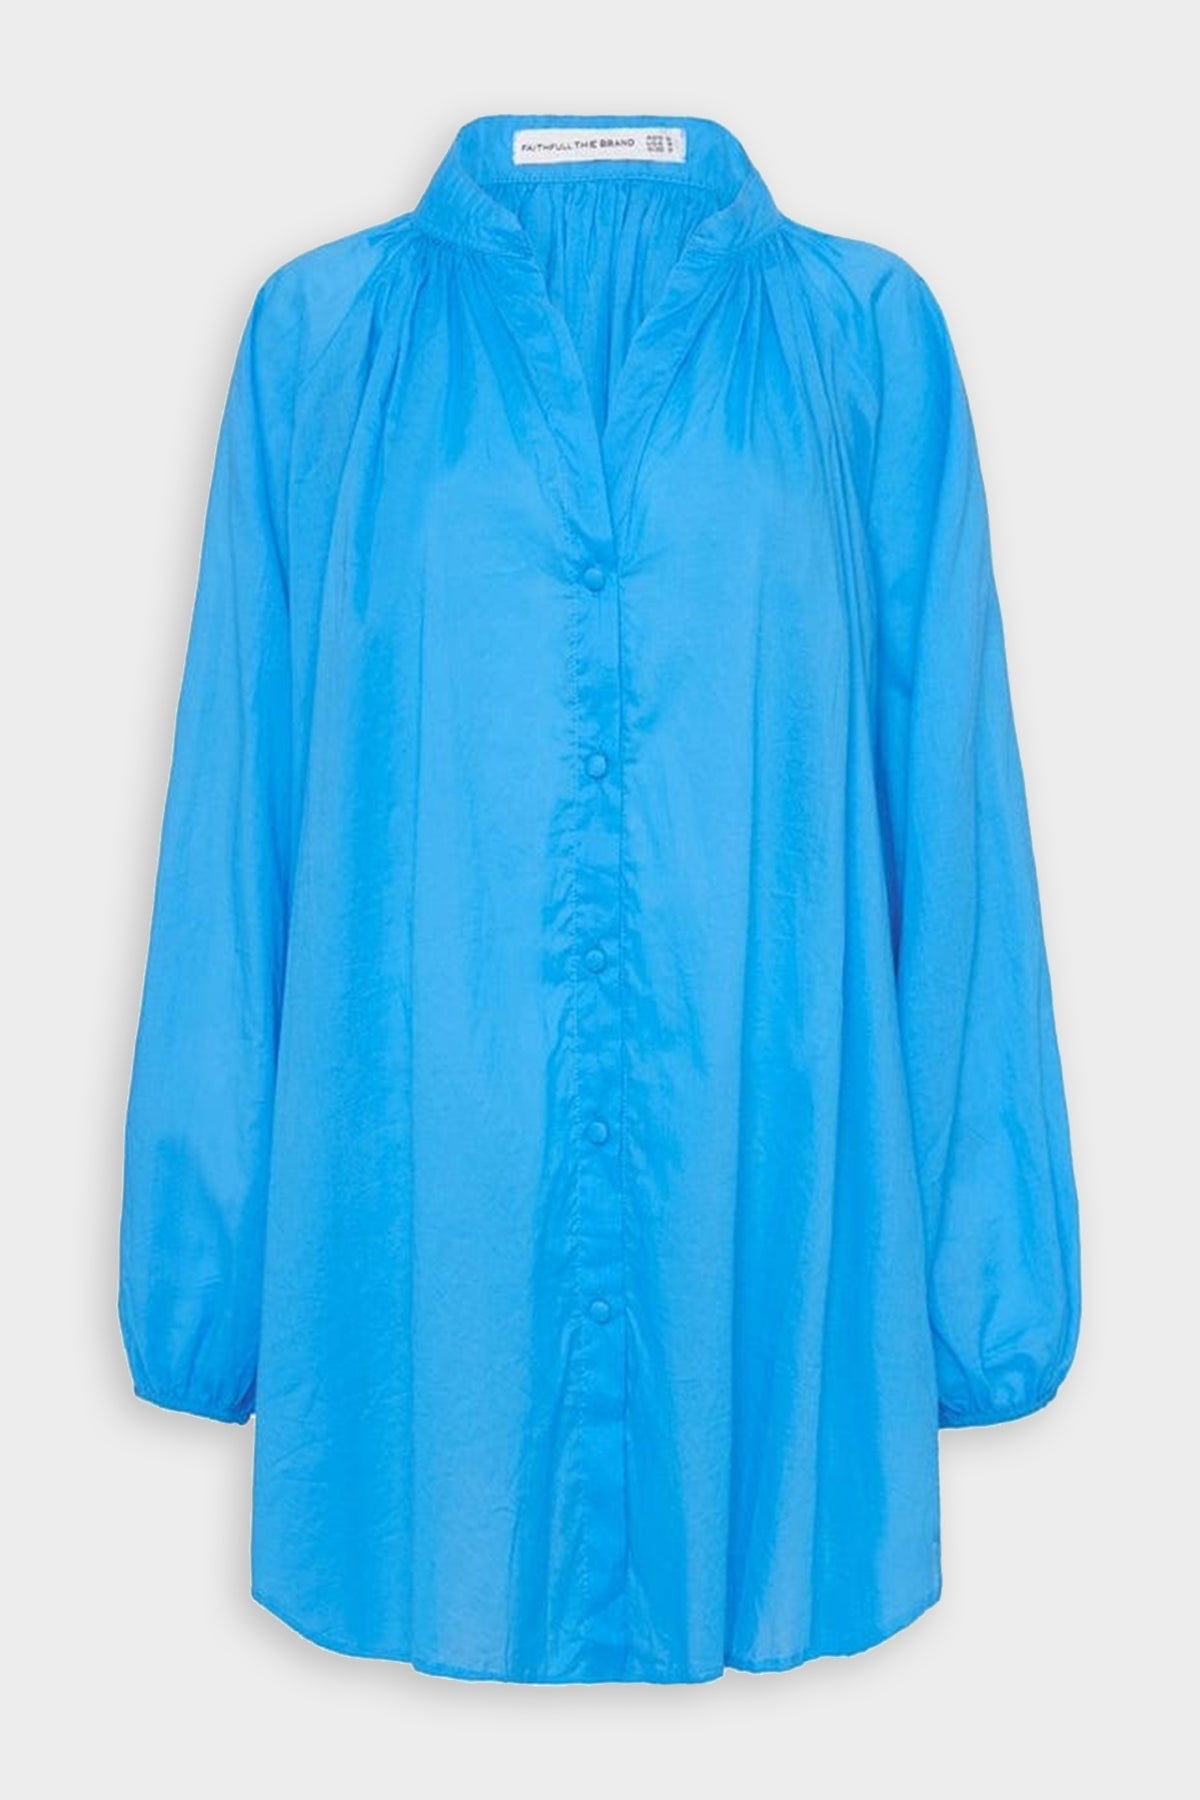 Lucita Smock Dress in Turquoise - shop-olivia.com